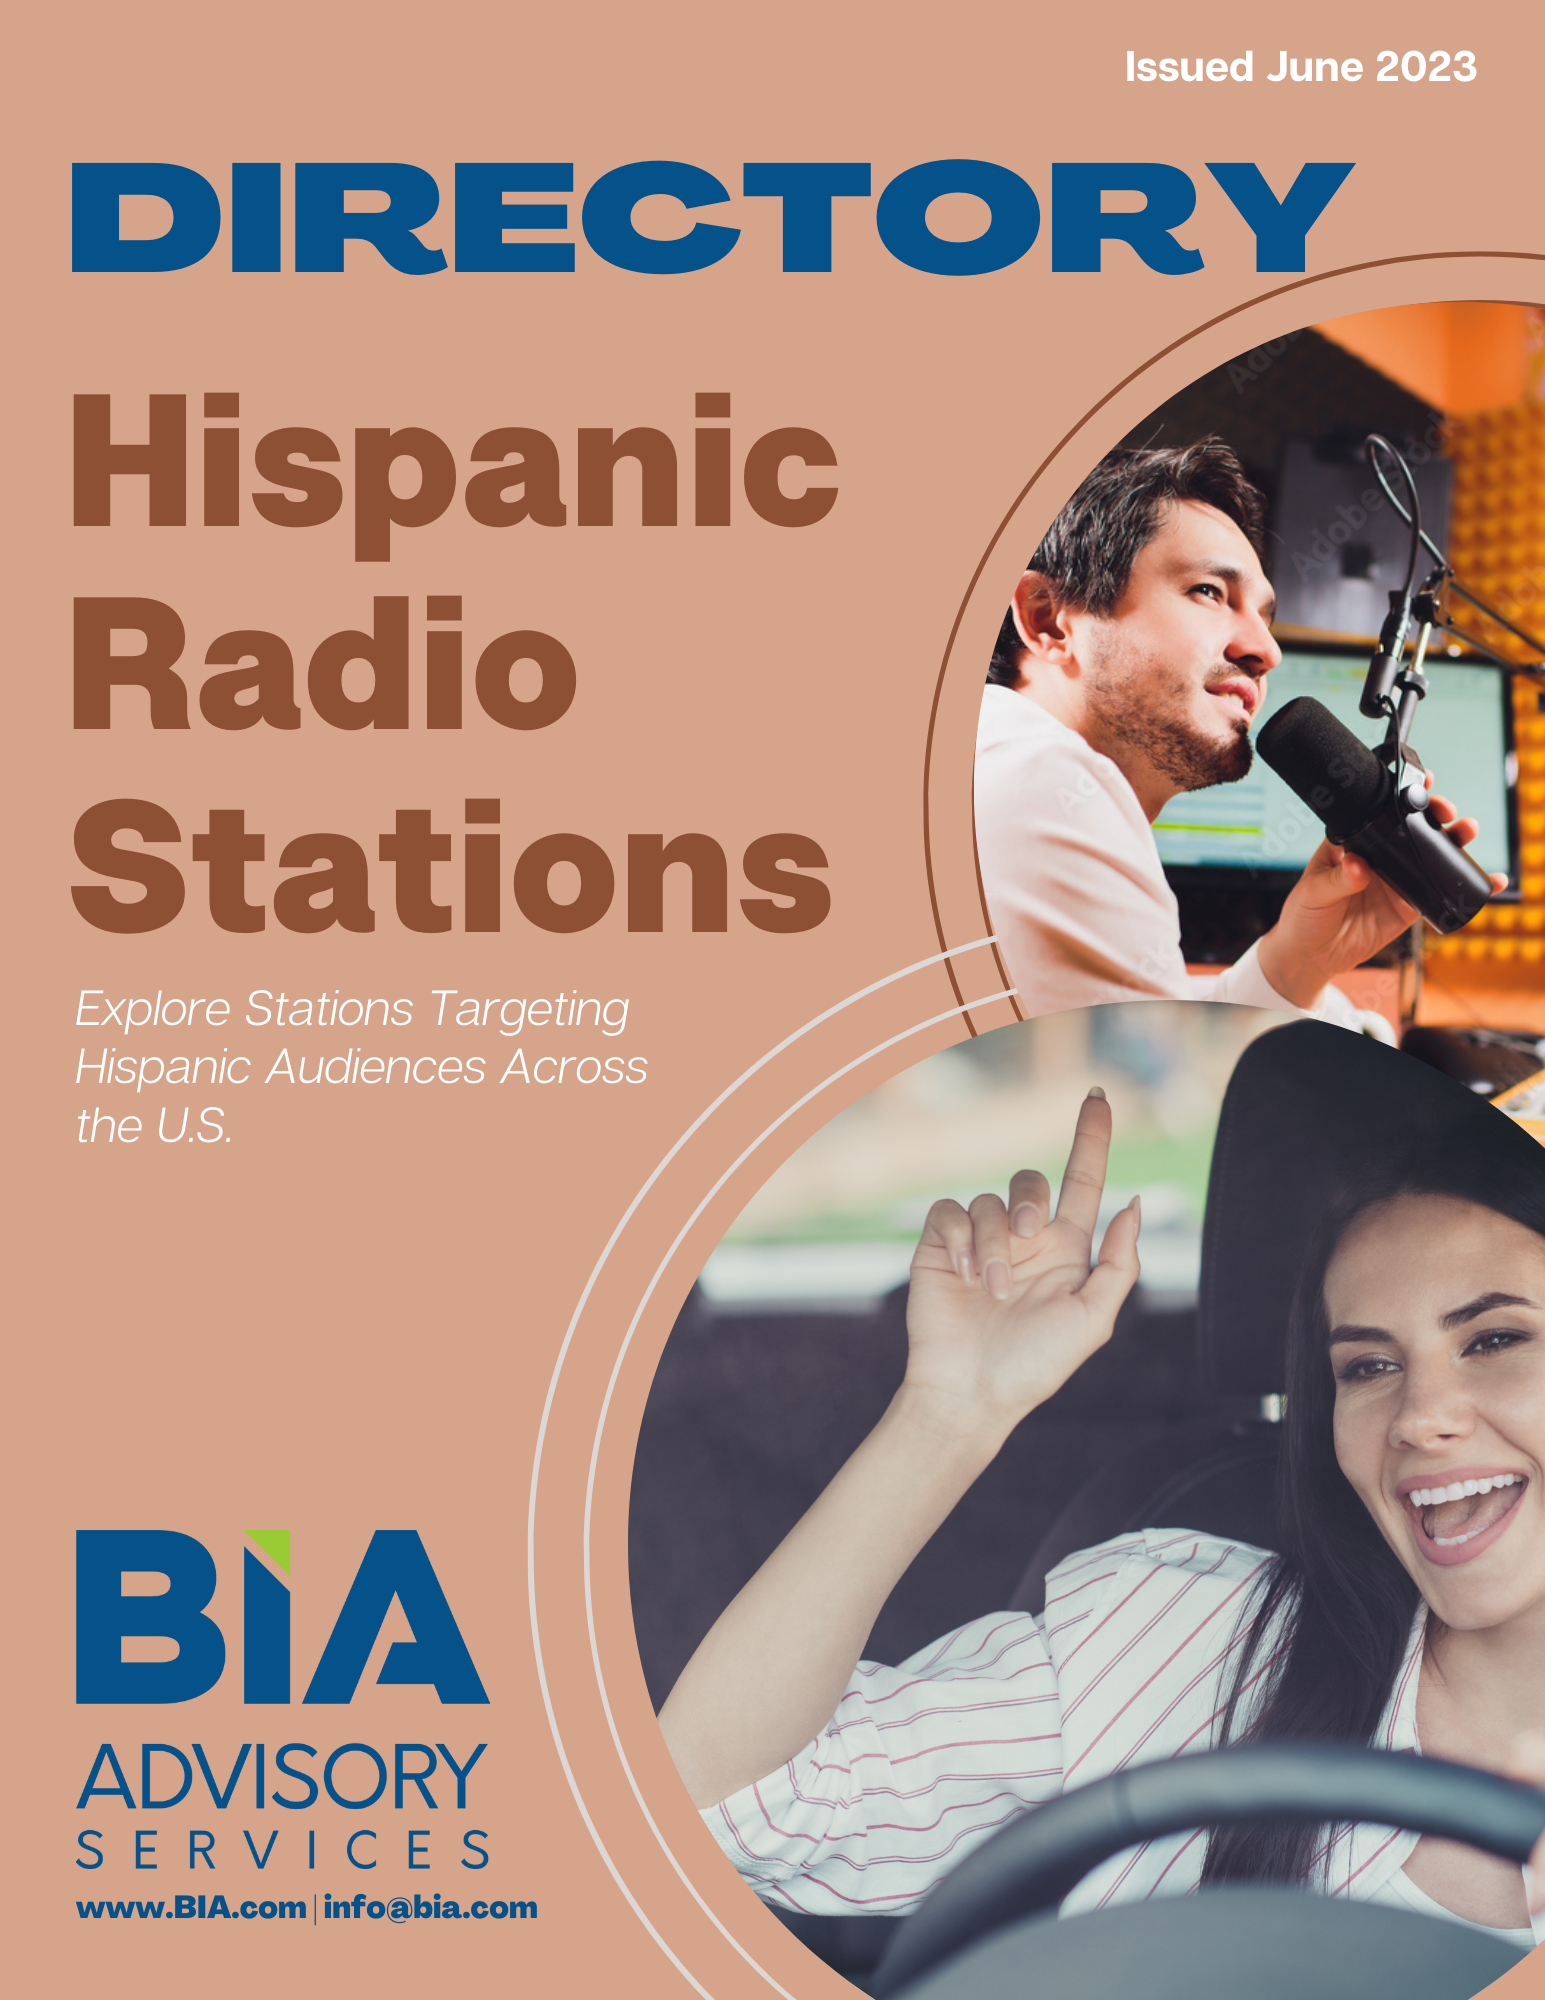 BIA Publishes Inaugural Hispanic Radio Stations Directory